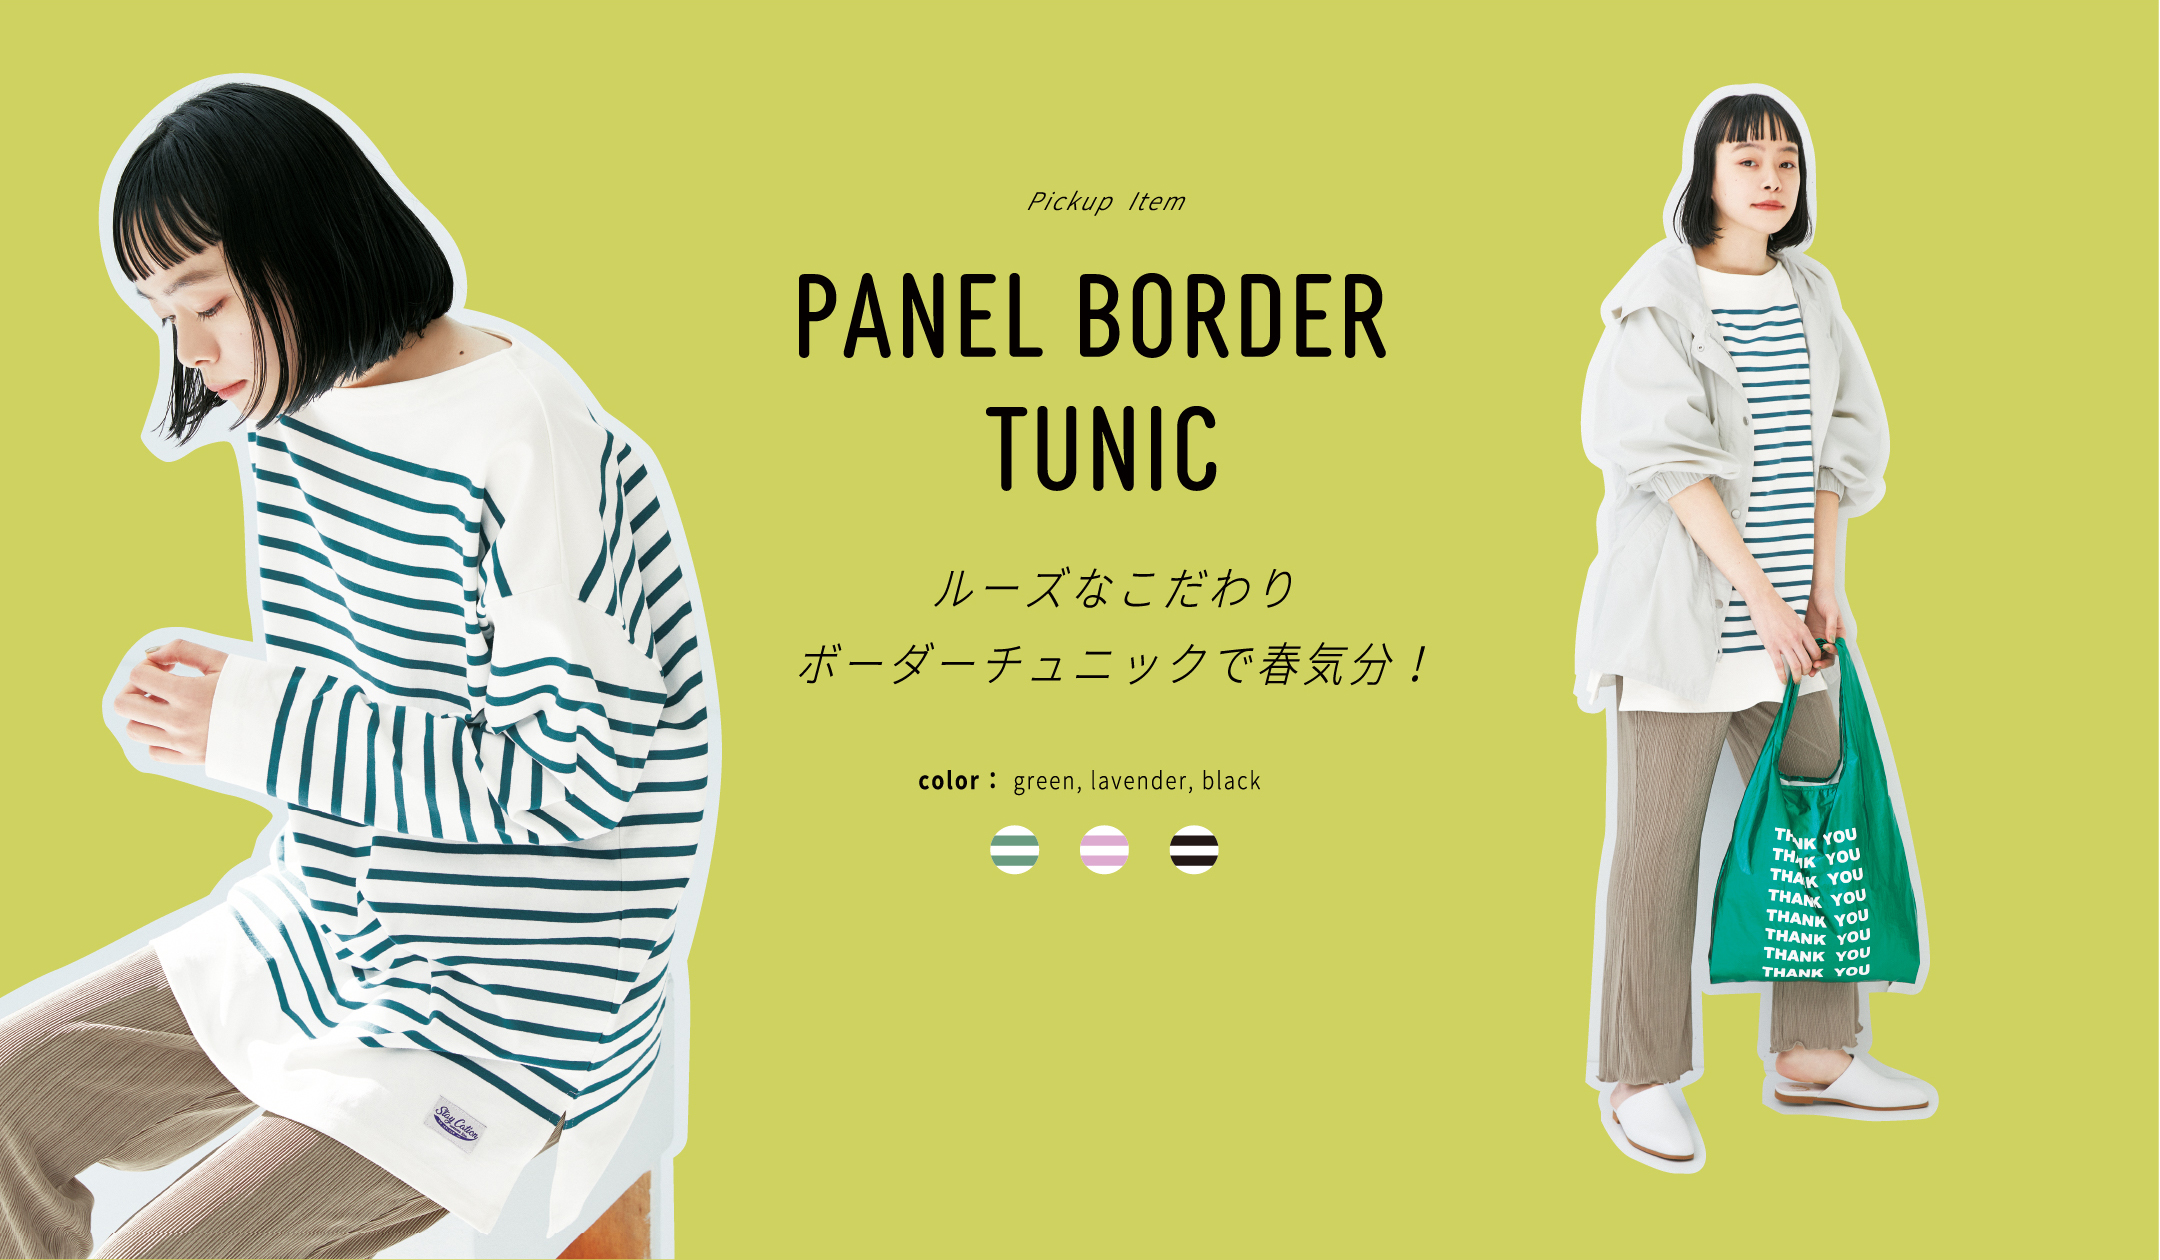 Panel border Tunic